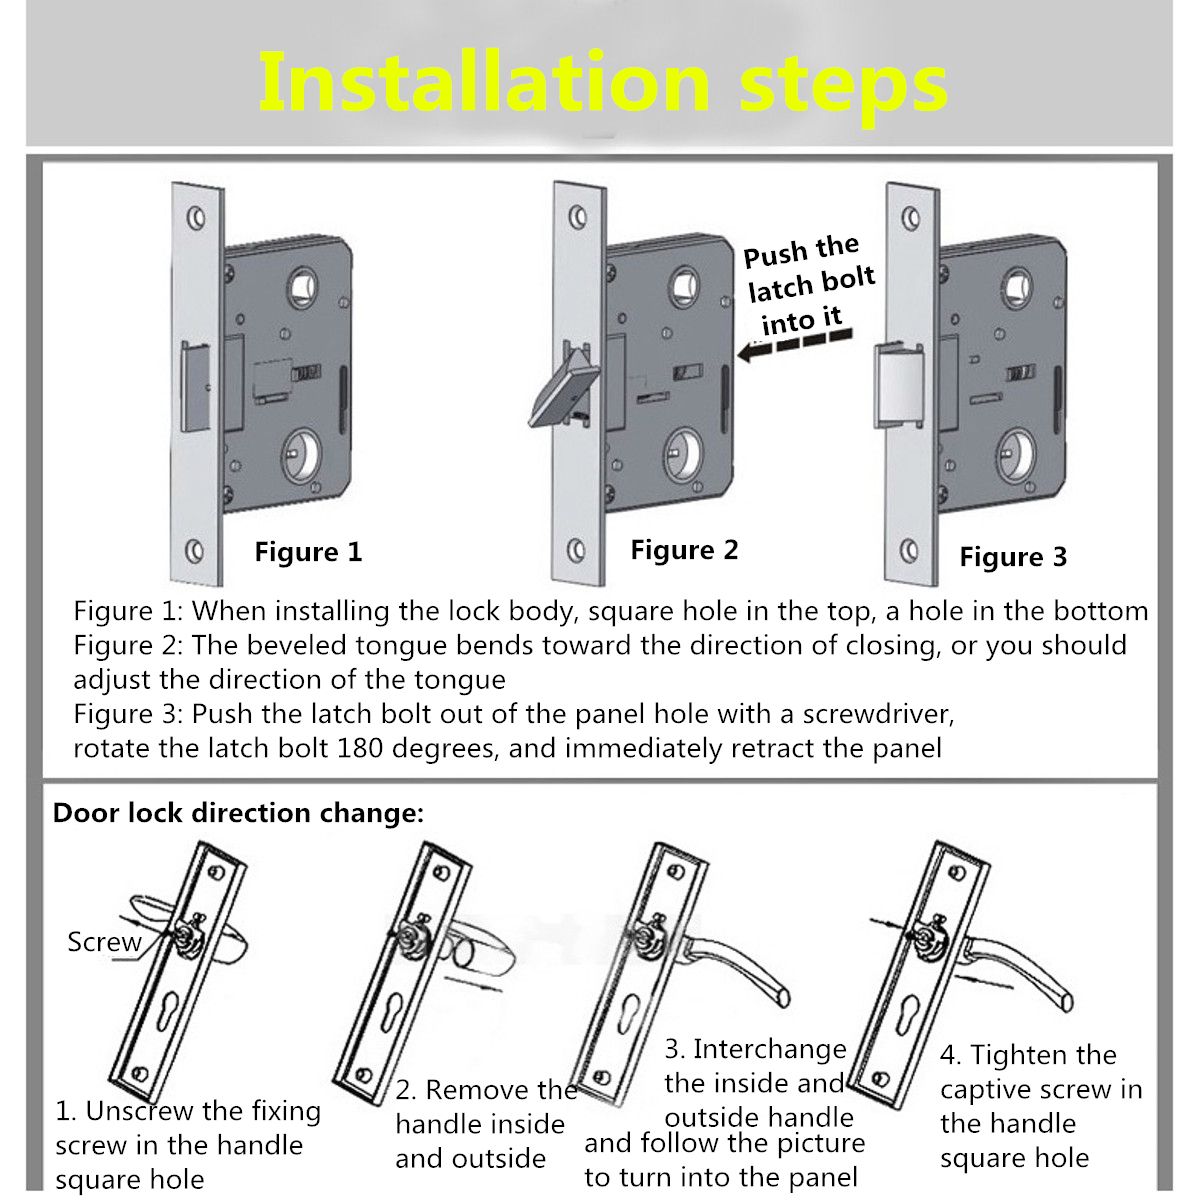 Mechanical-Interior-Door-Handle-Cylinder-Lock-Lever-Latch-Home-Security-Set-1258900